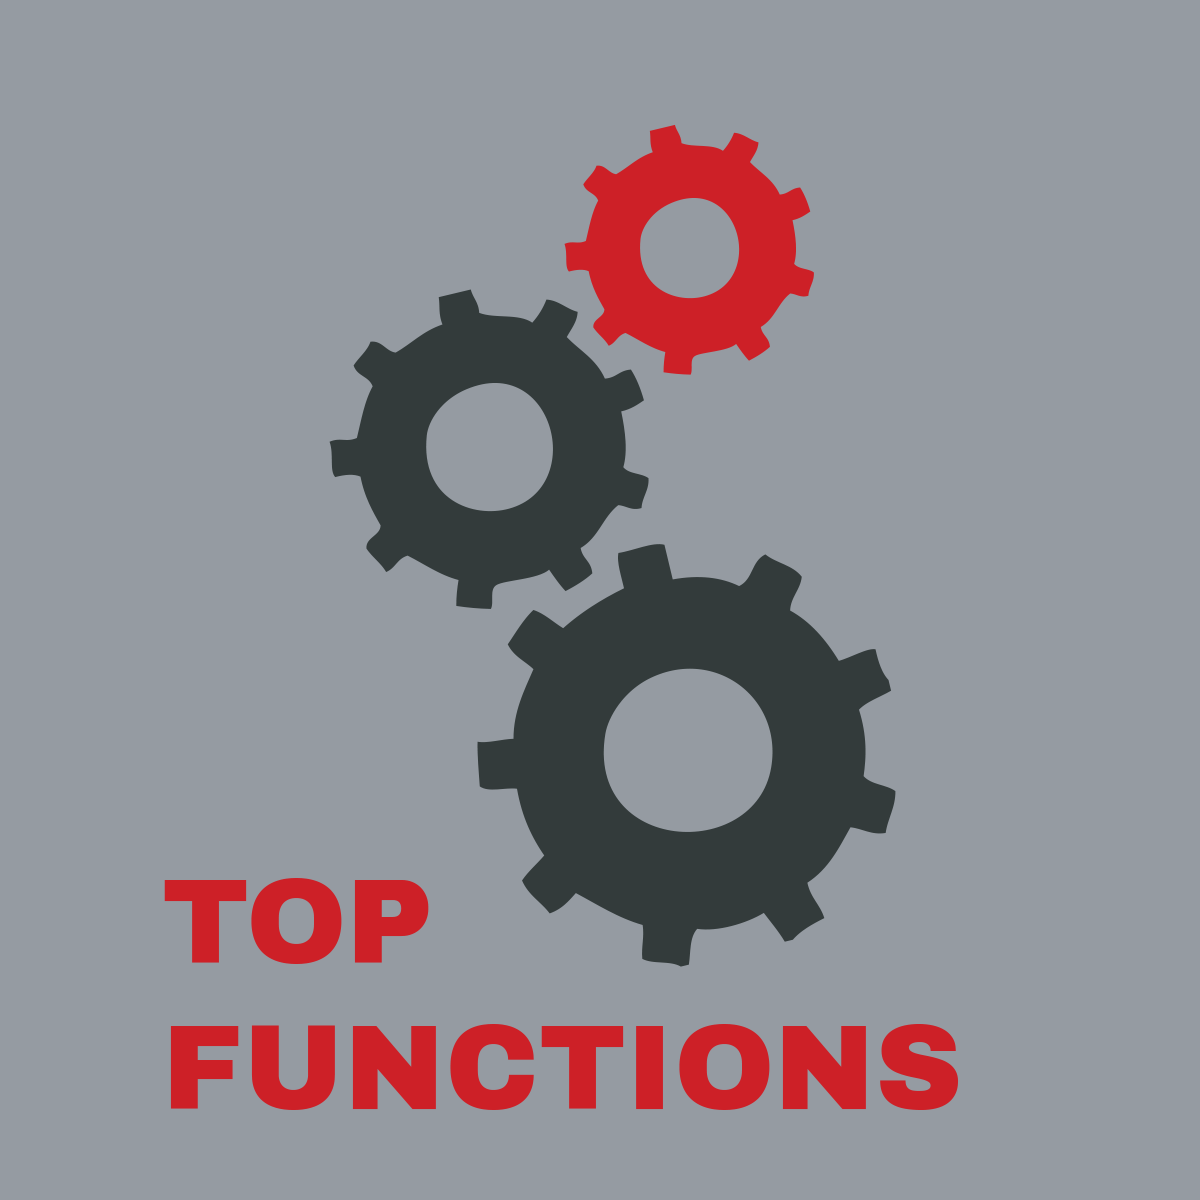 Top Functions